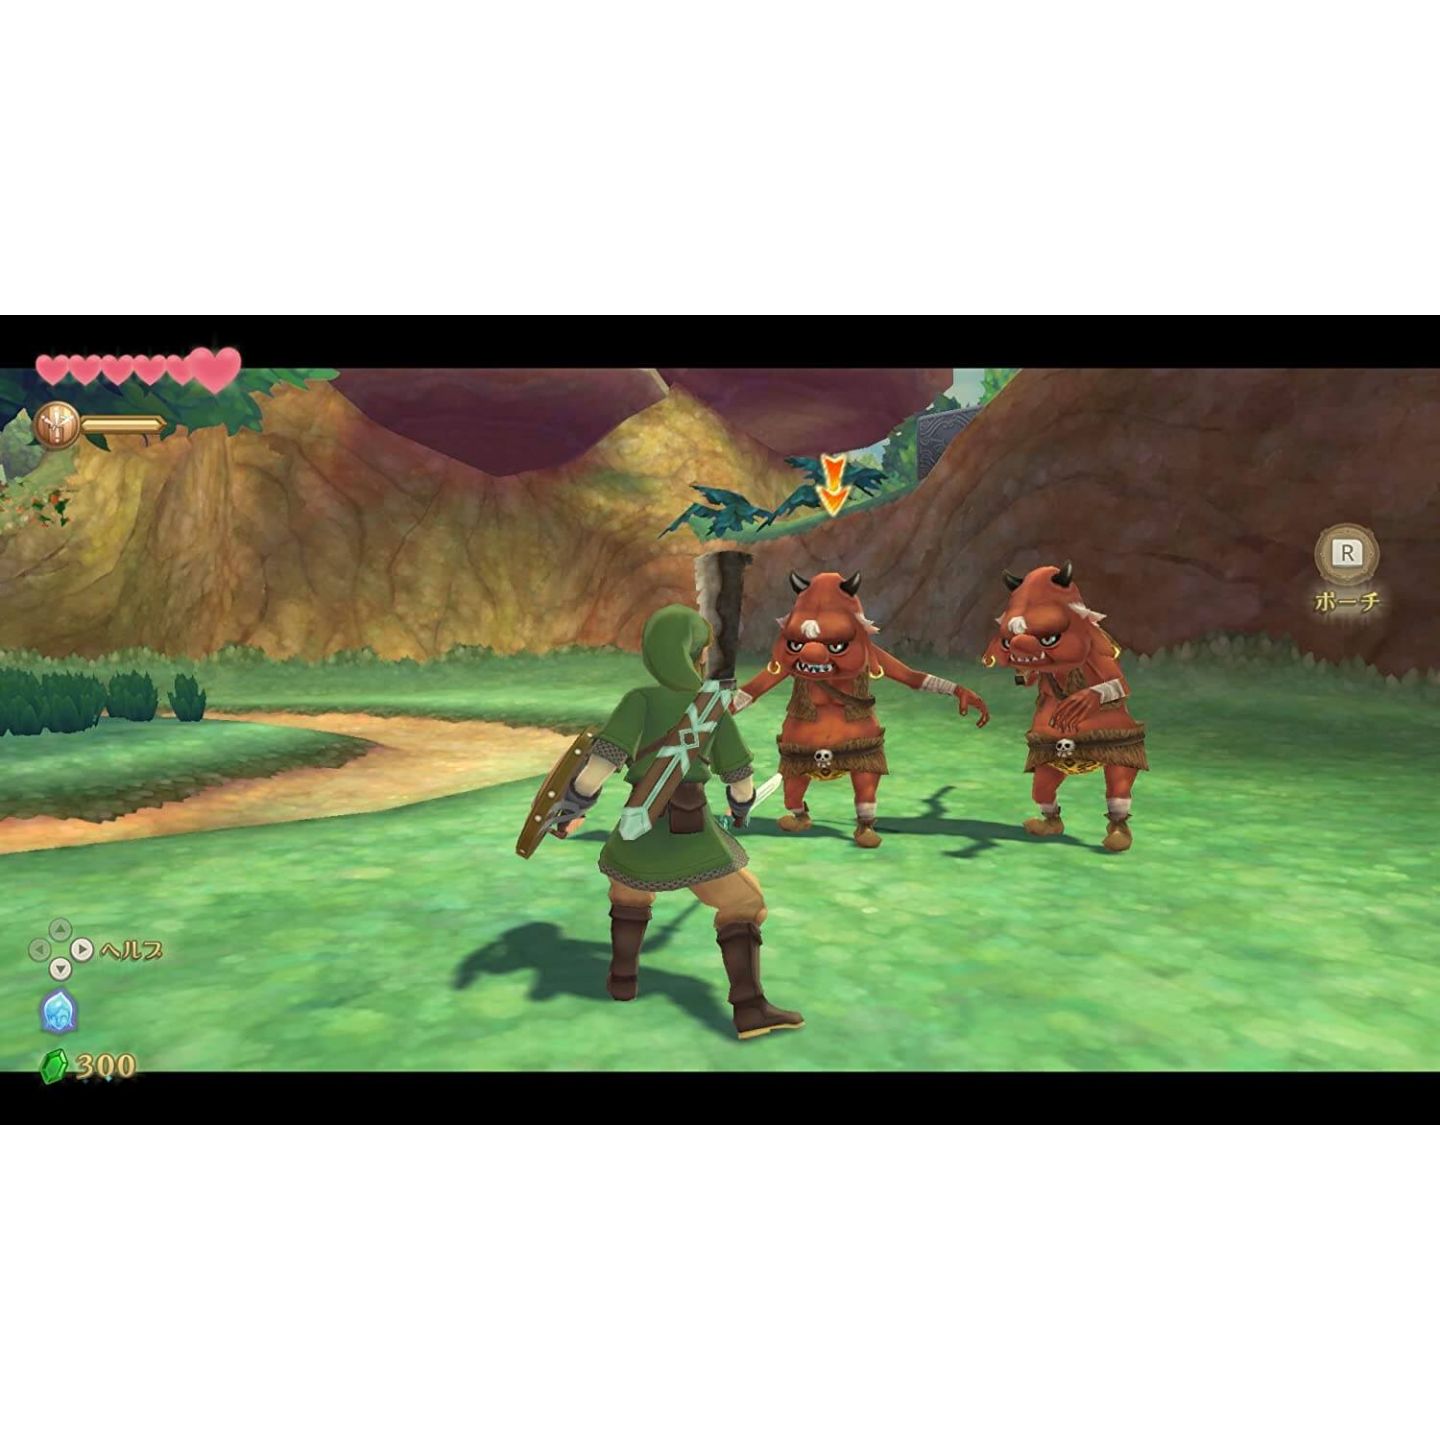 The Legend of Zelda: Skyward Sword HD: Nintendo Switch